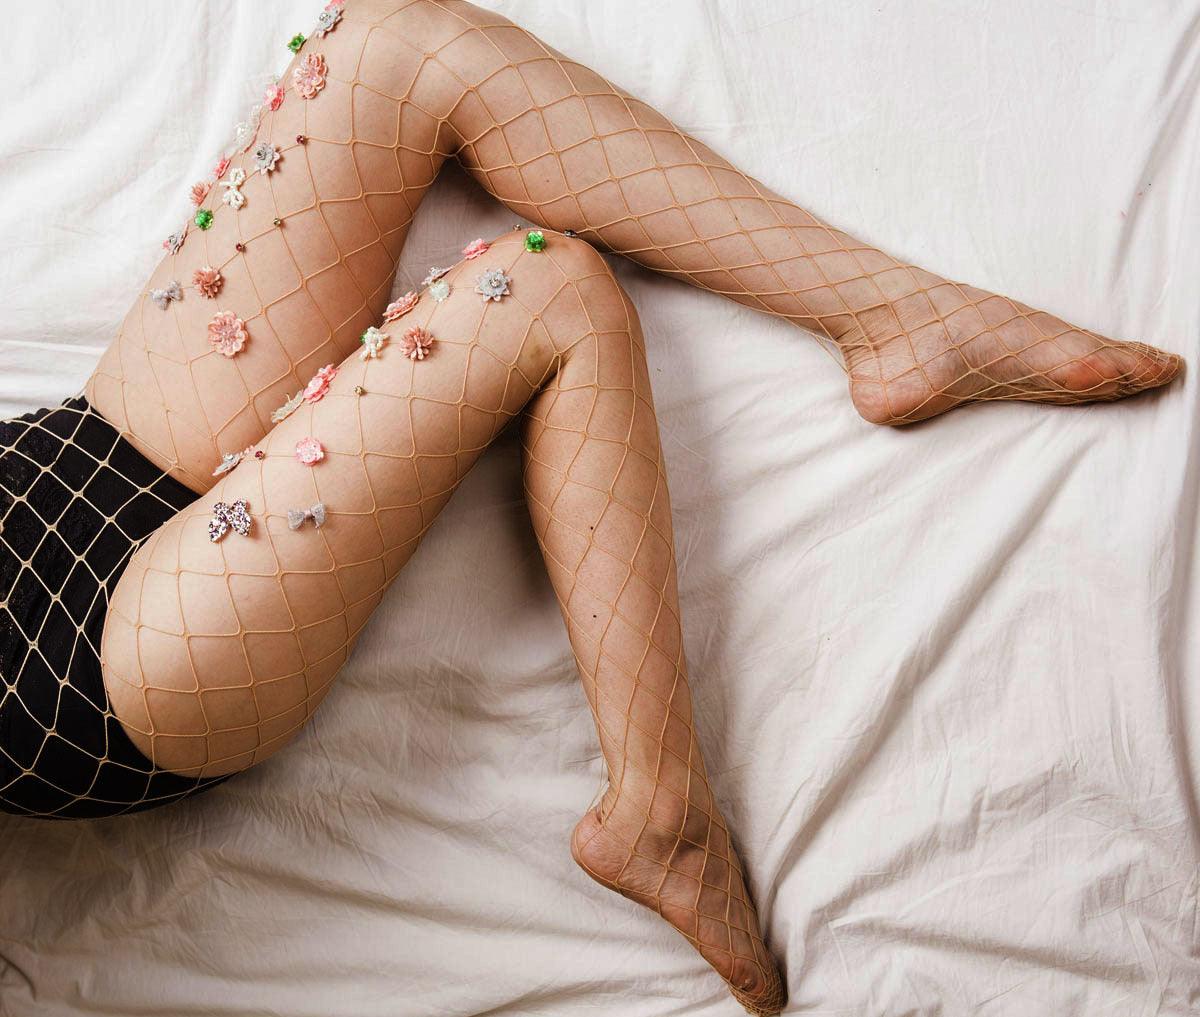 Hot Diamond Stylish Mesh Stockings - ForVanity lingerie accessories, Pantyhose & Stockings, women's lingerie Stockings